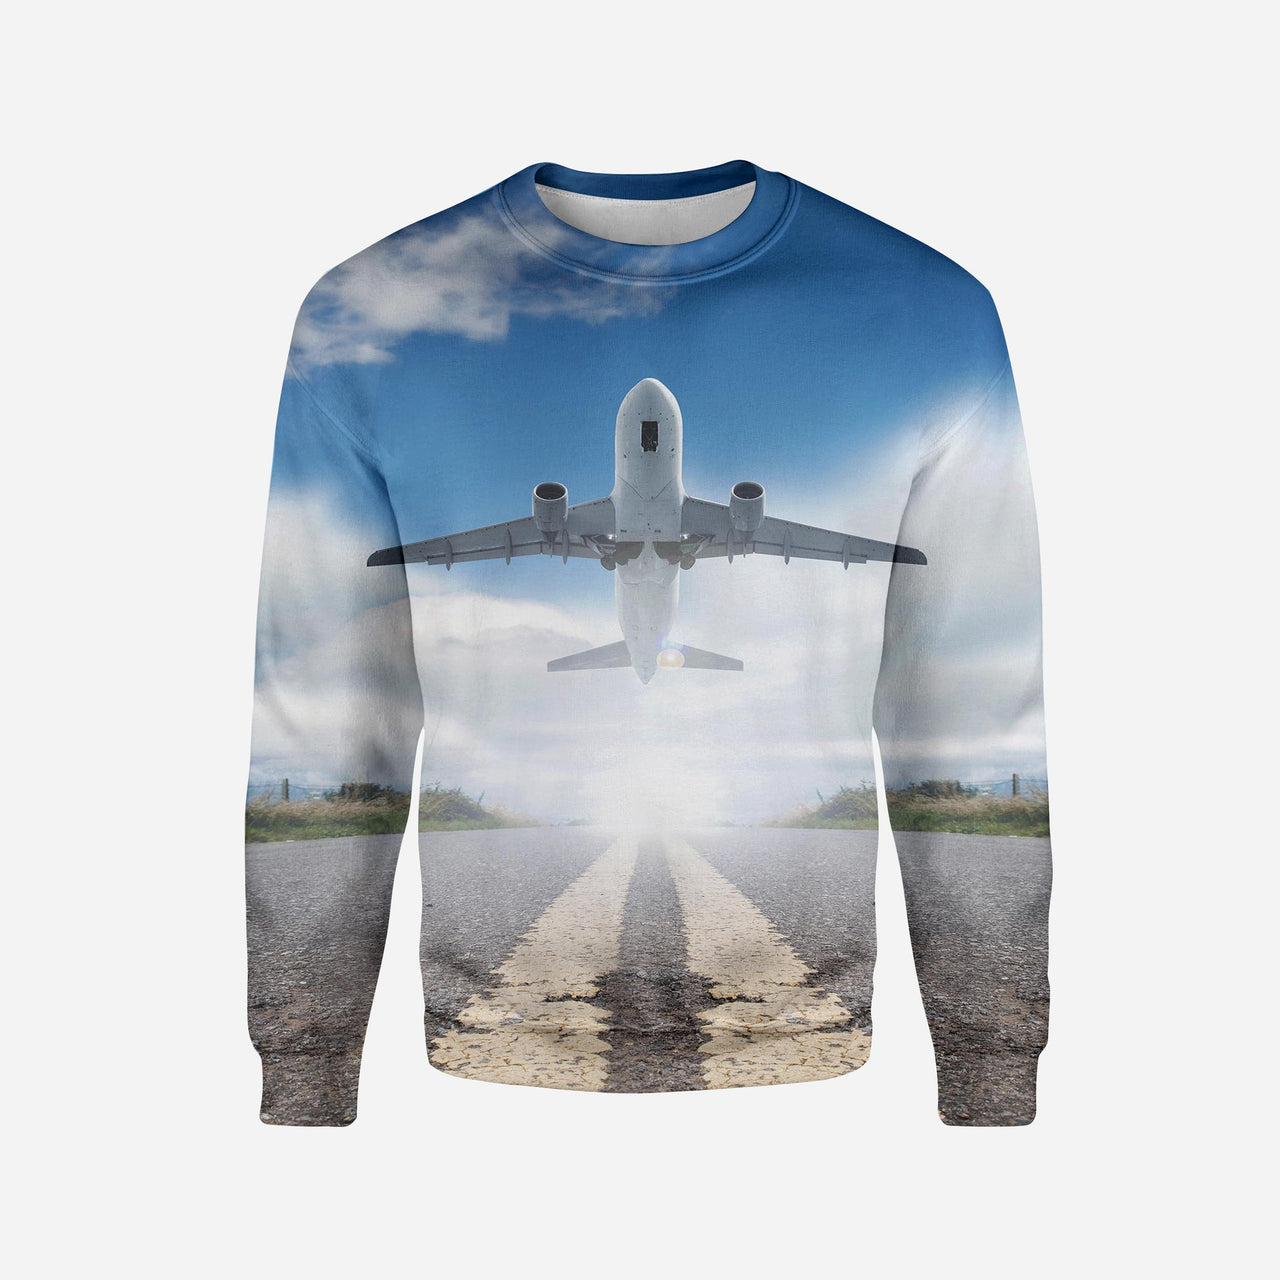 Taking off Aircraft Printed 3D Sweatshirts